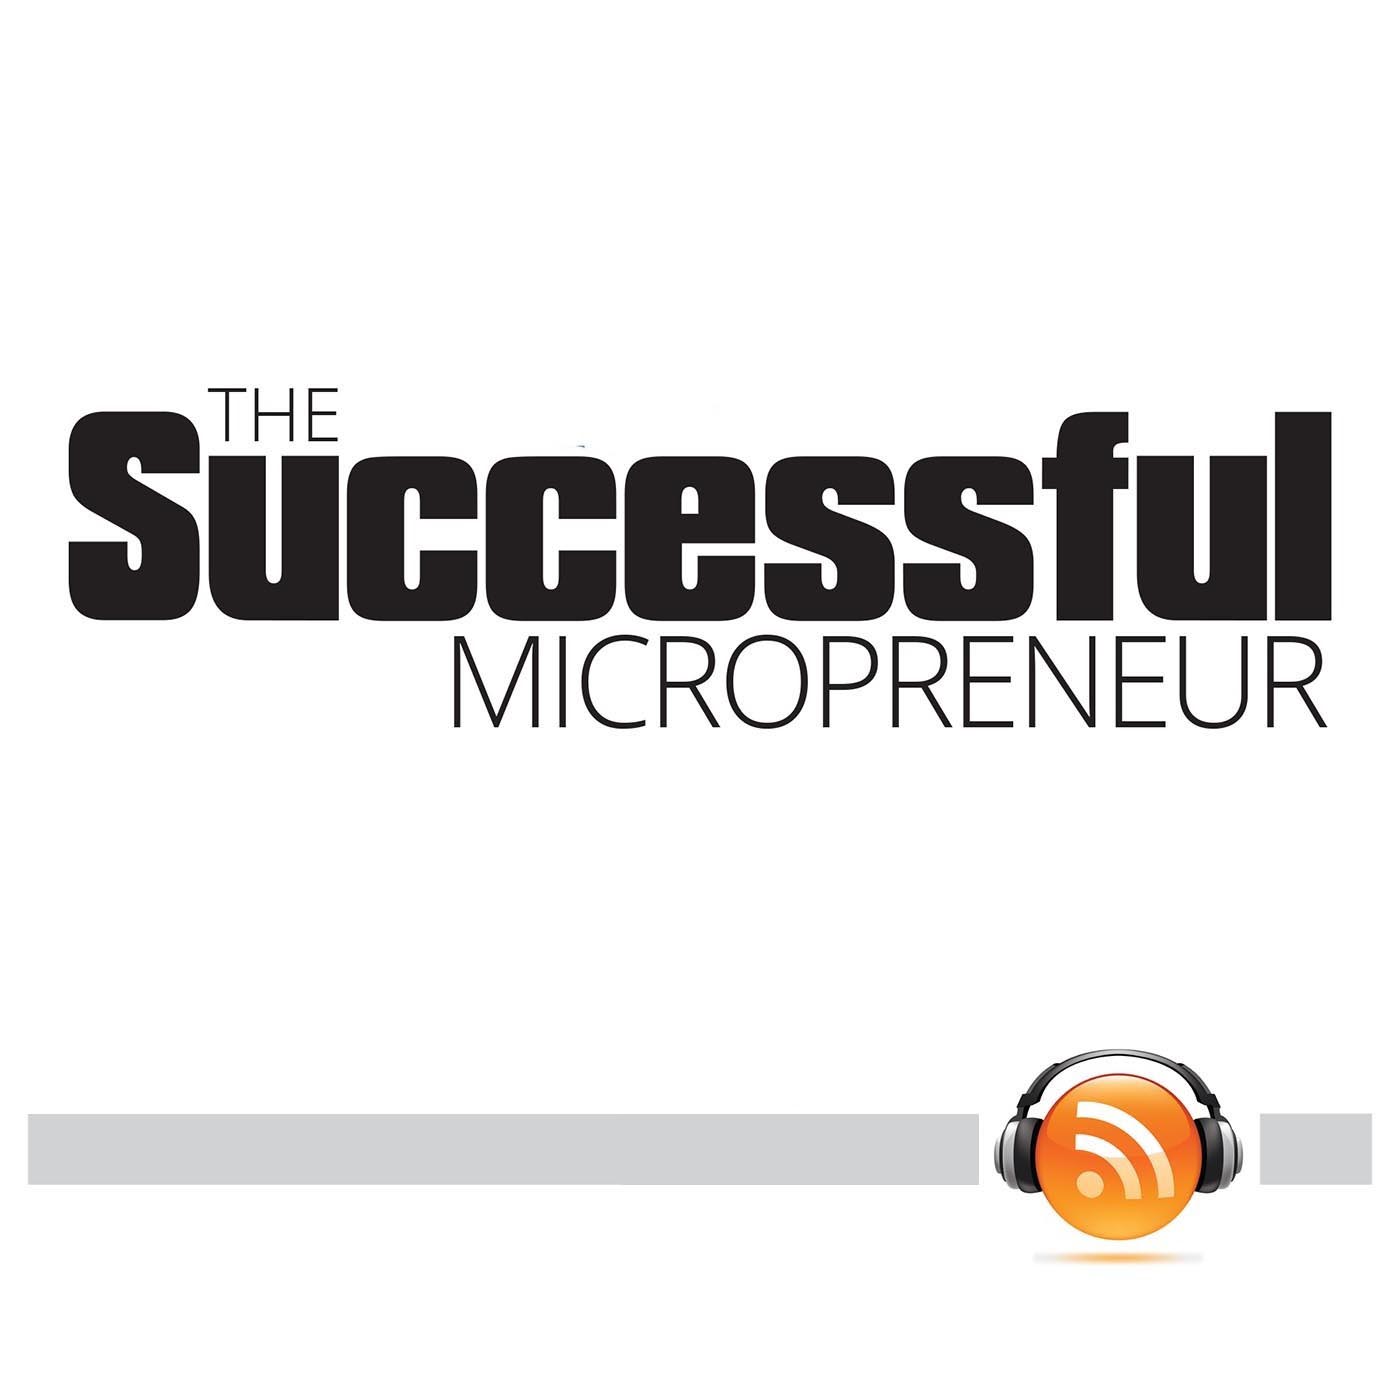 The Successful Micropreneur